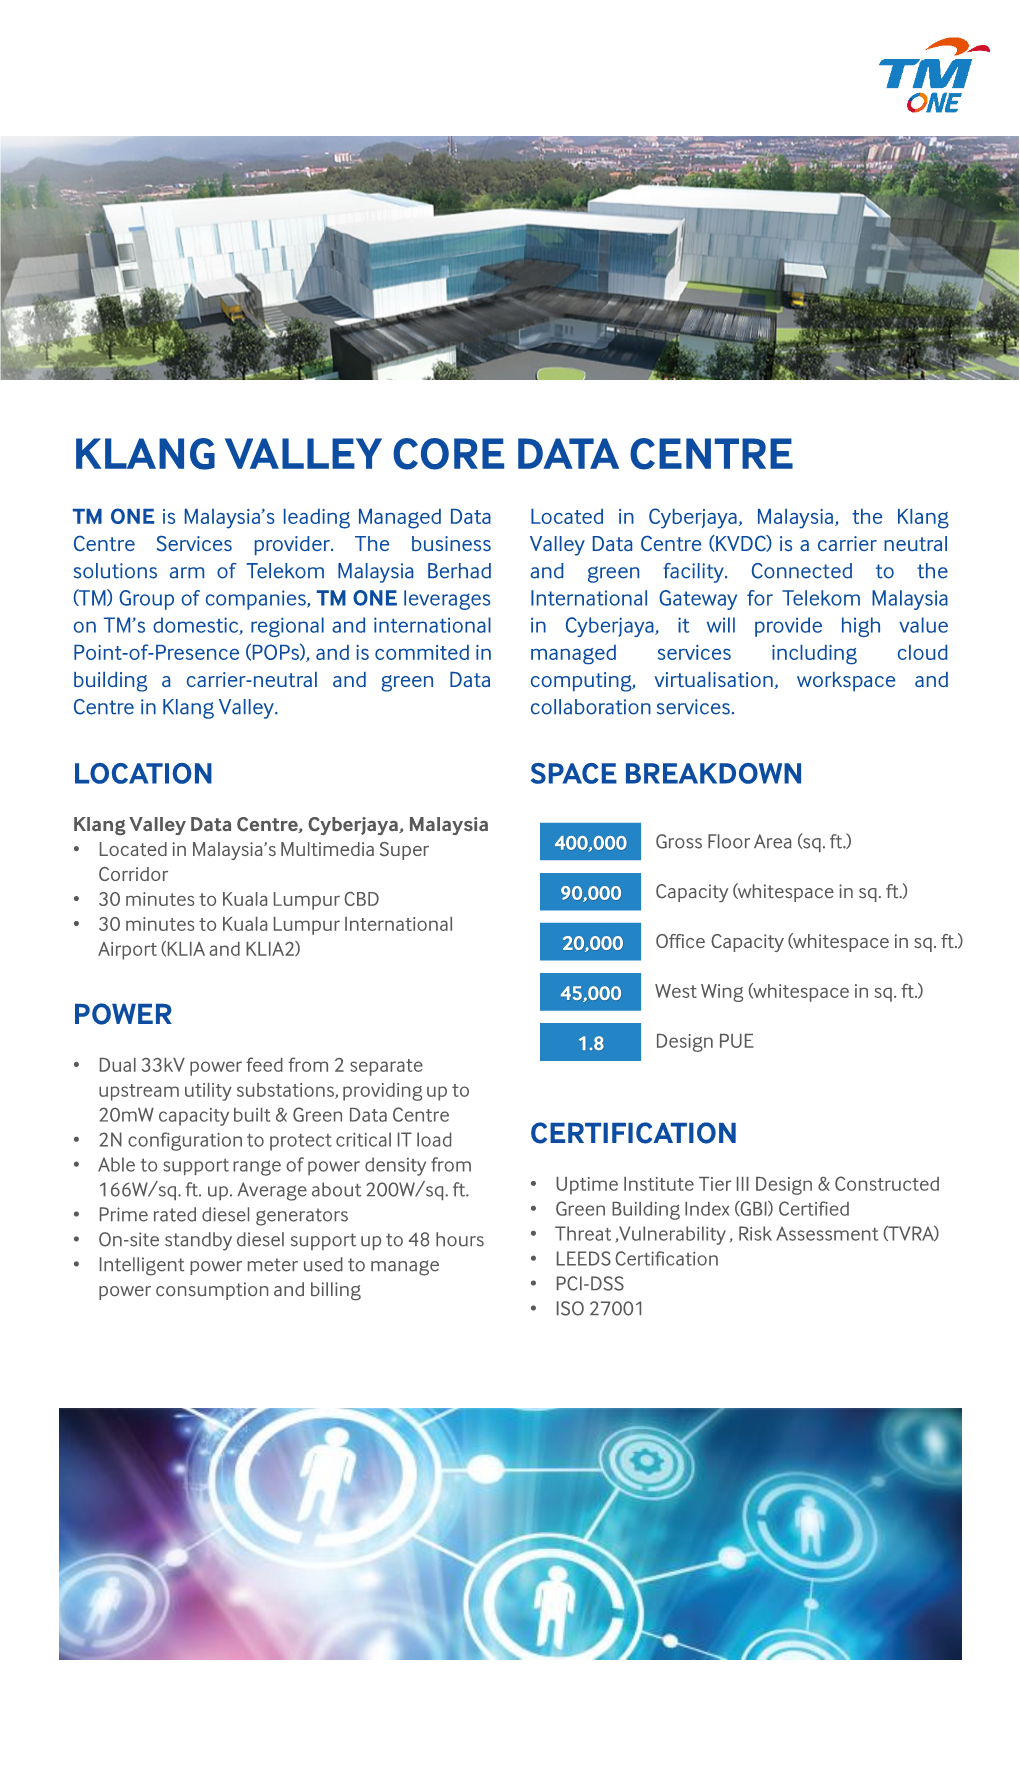 Klang Valley Core Data Centre